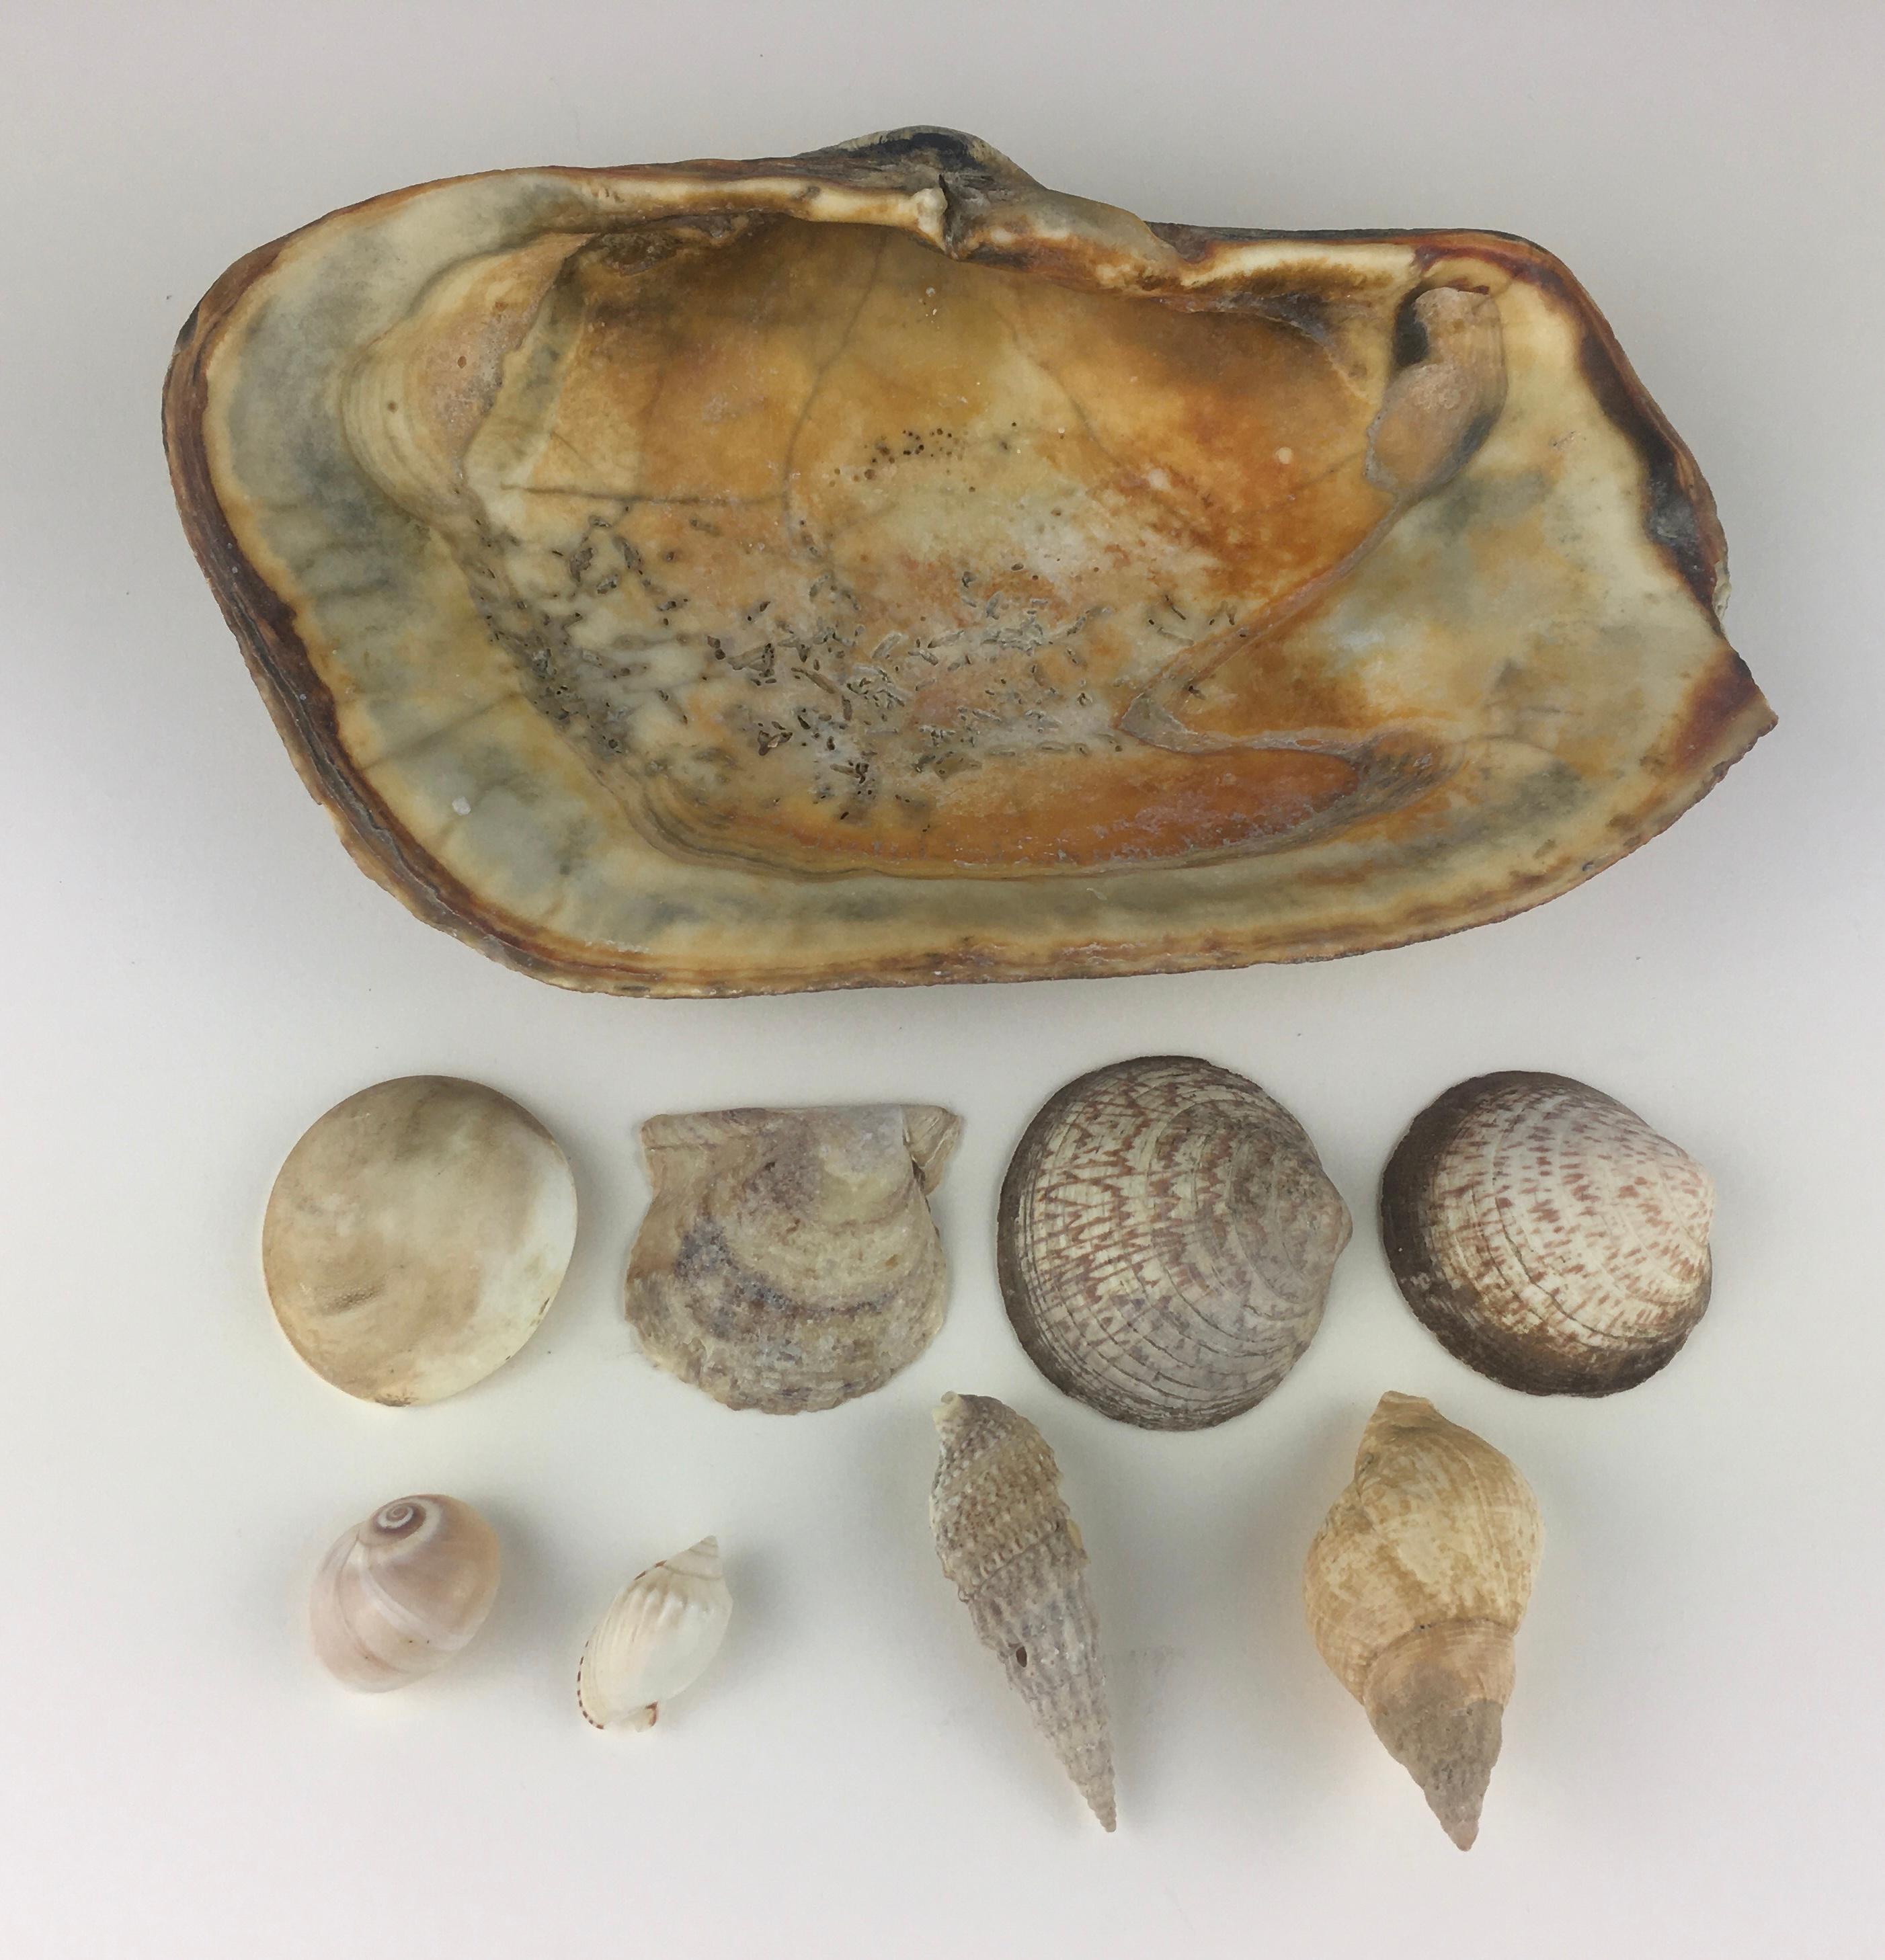 Organic Modern Collection of 9 Seashells